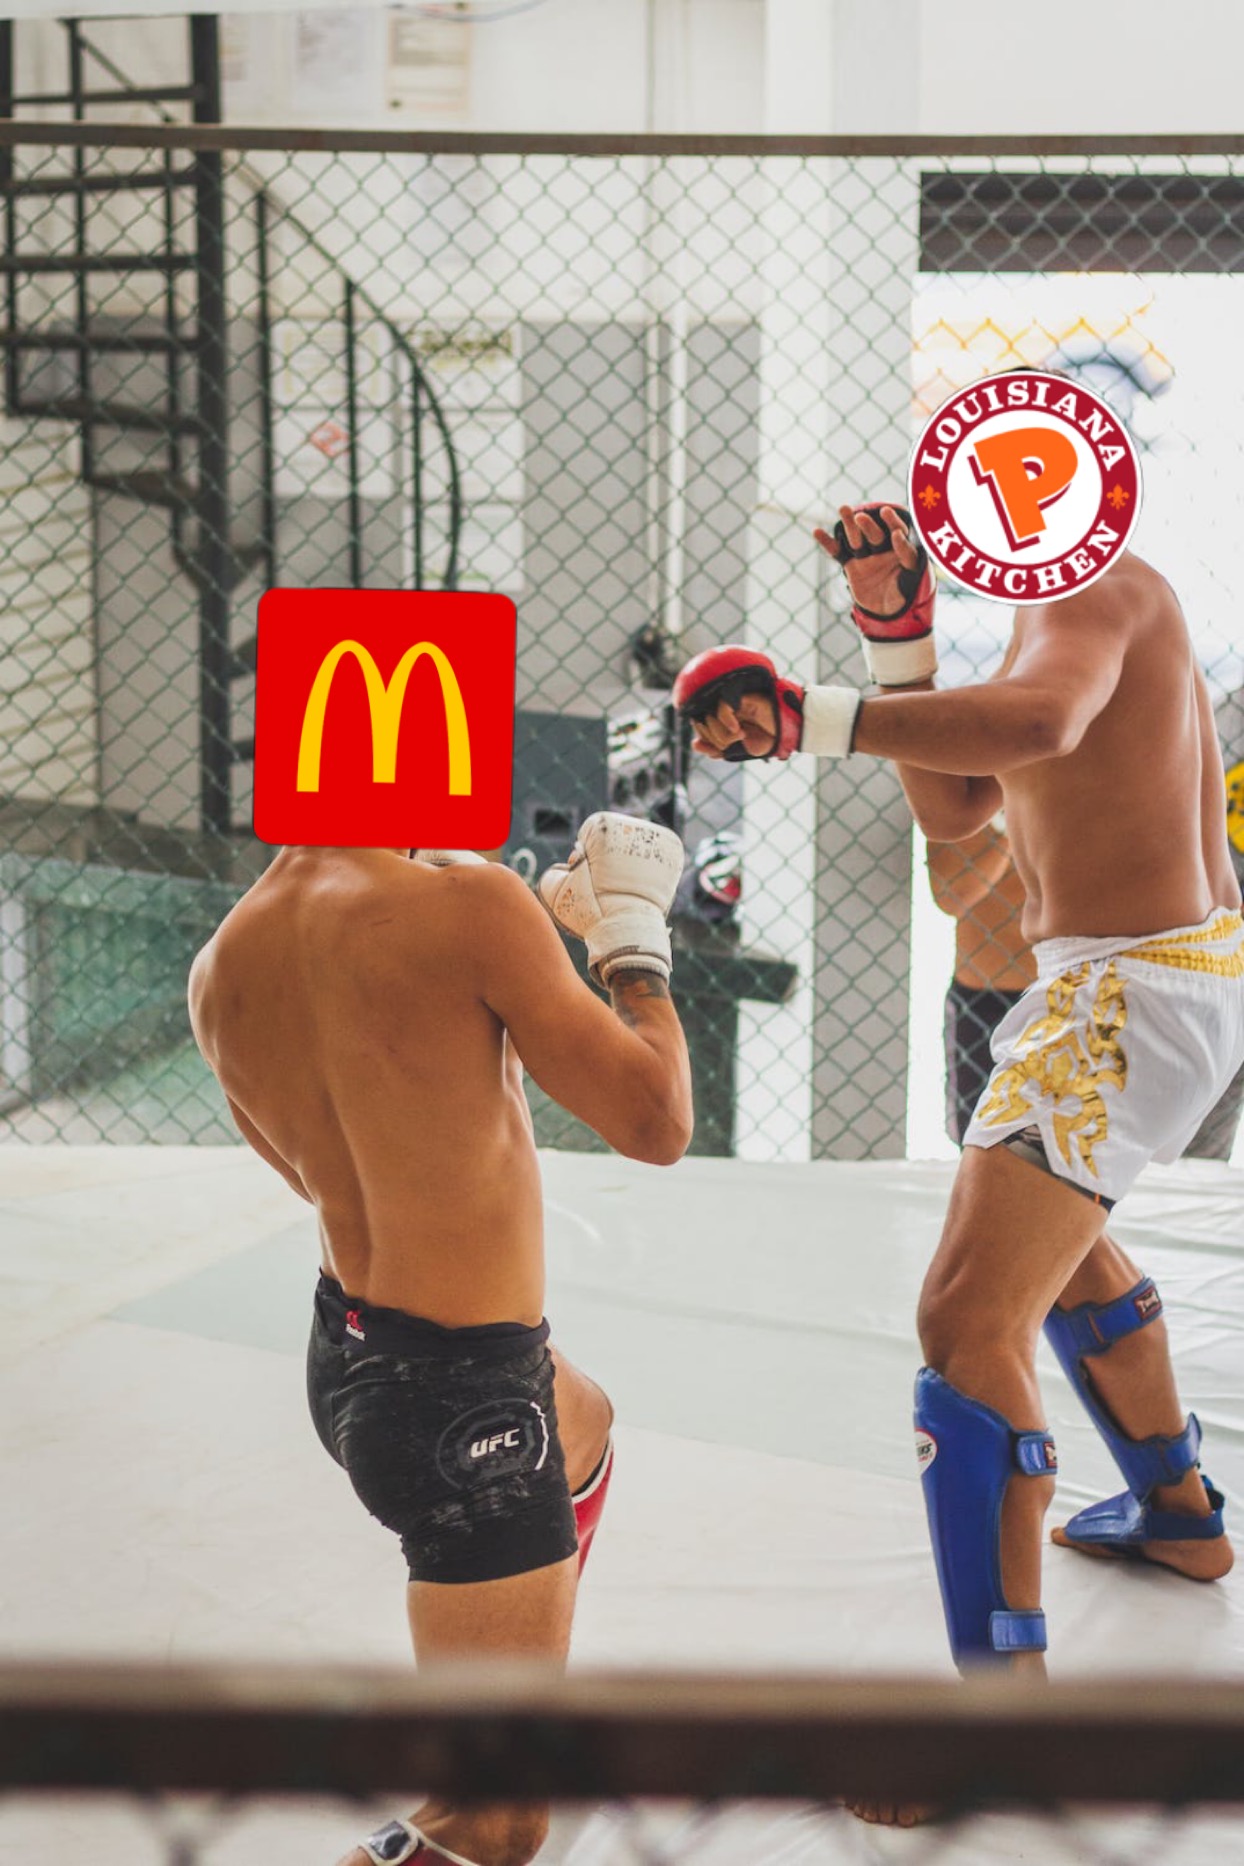 Chicken Nugget Wars: Popeyes vs McDonald’s